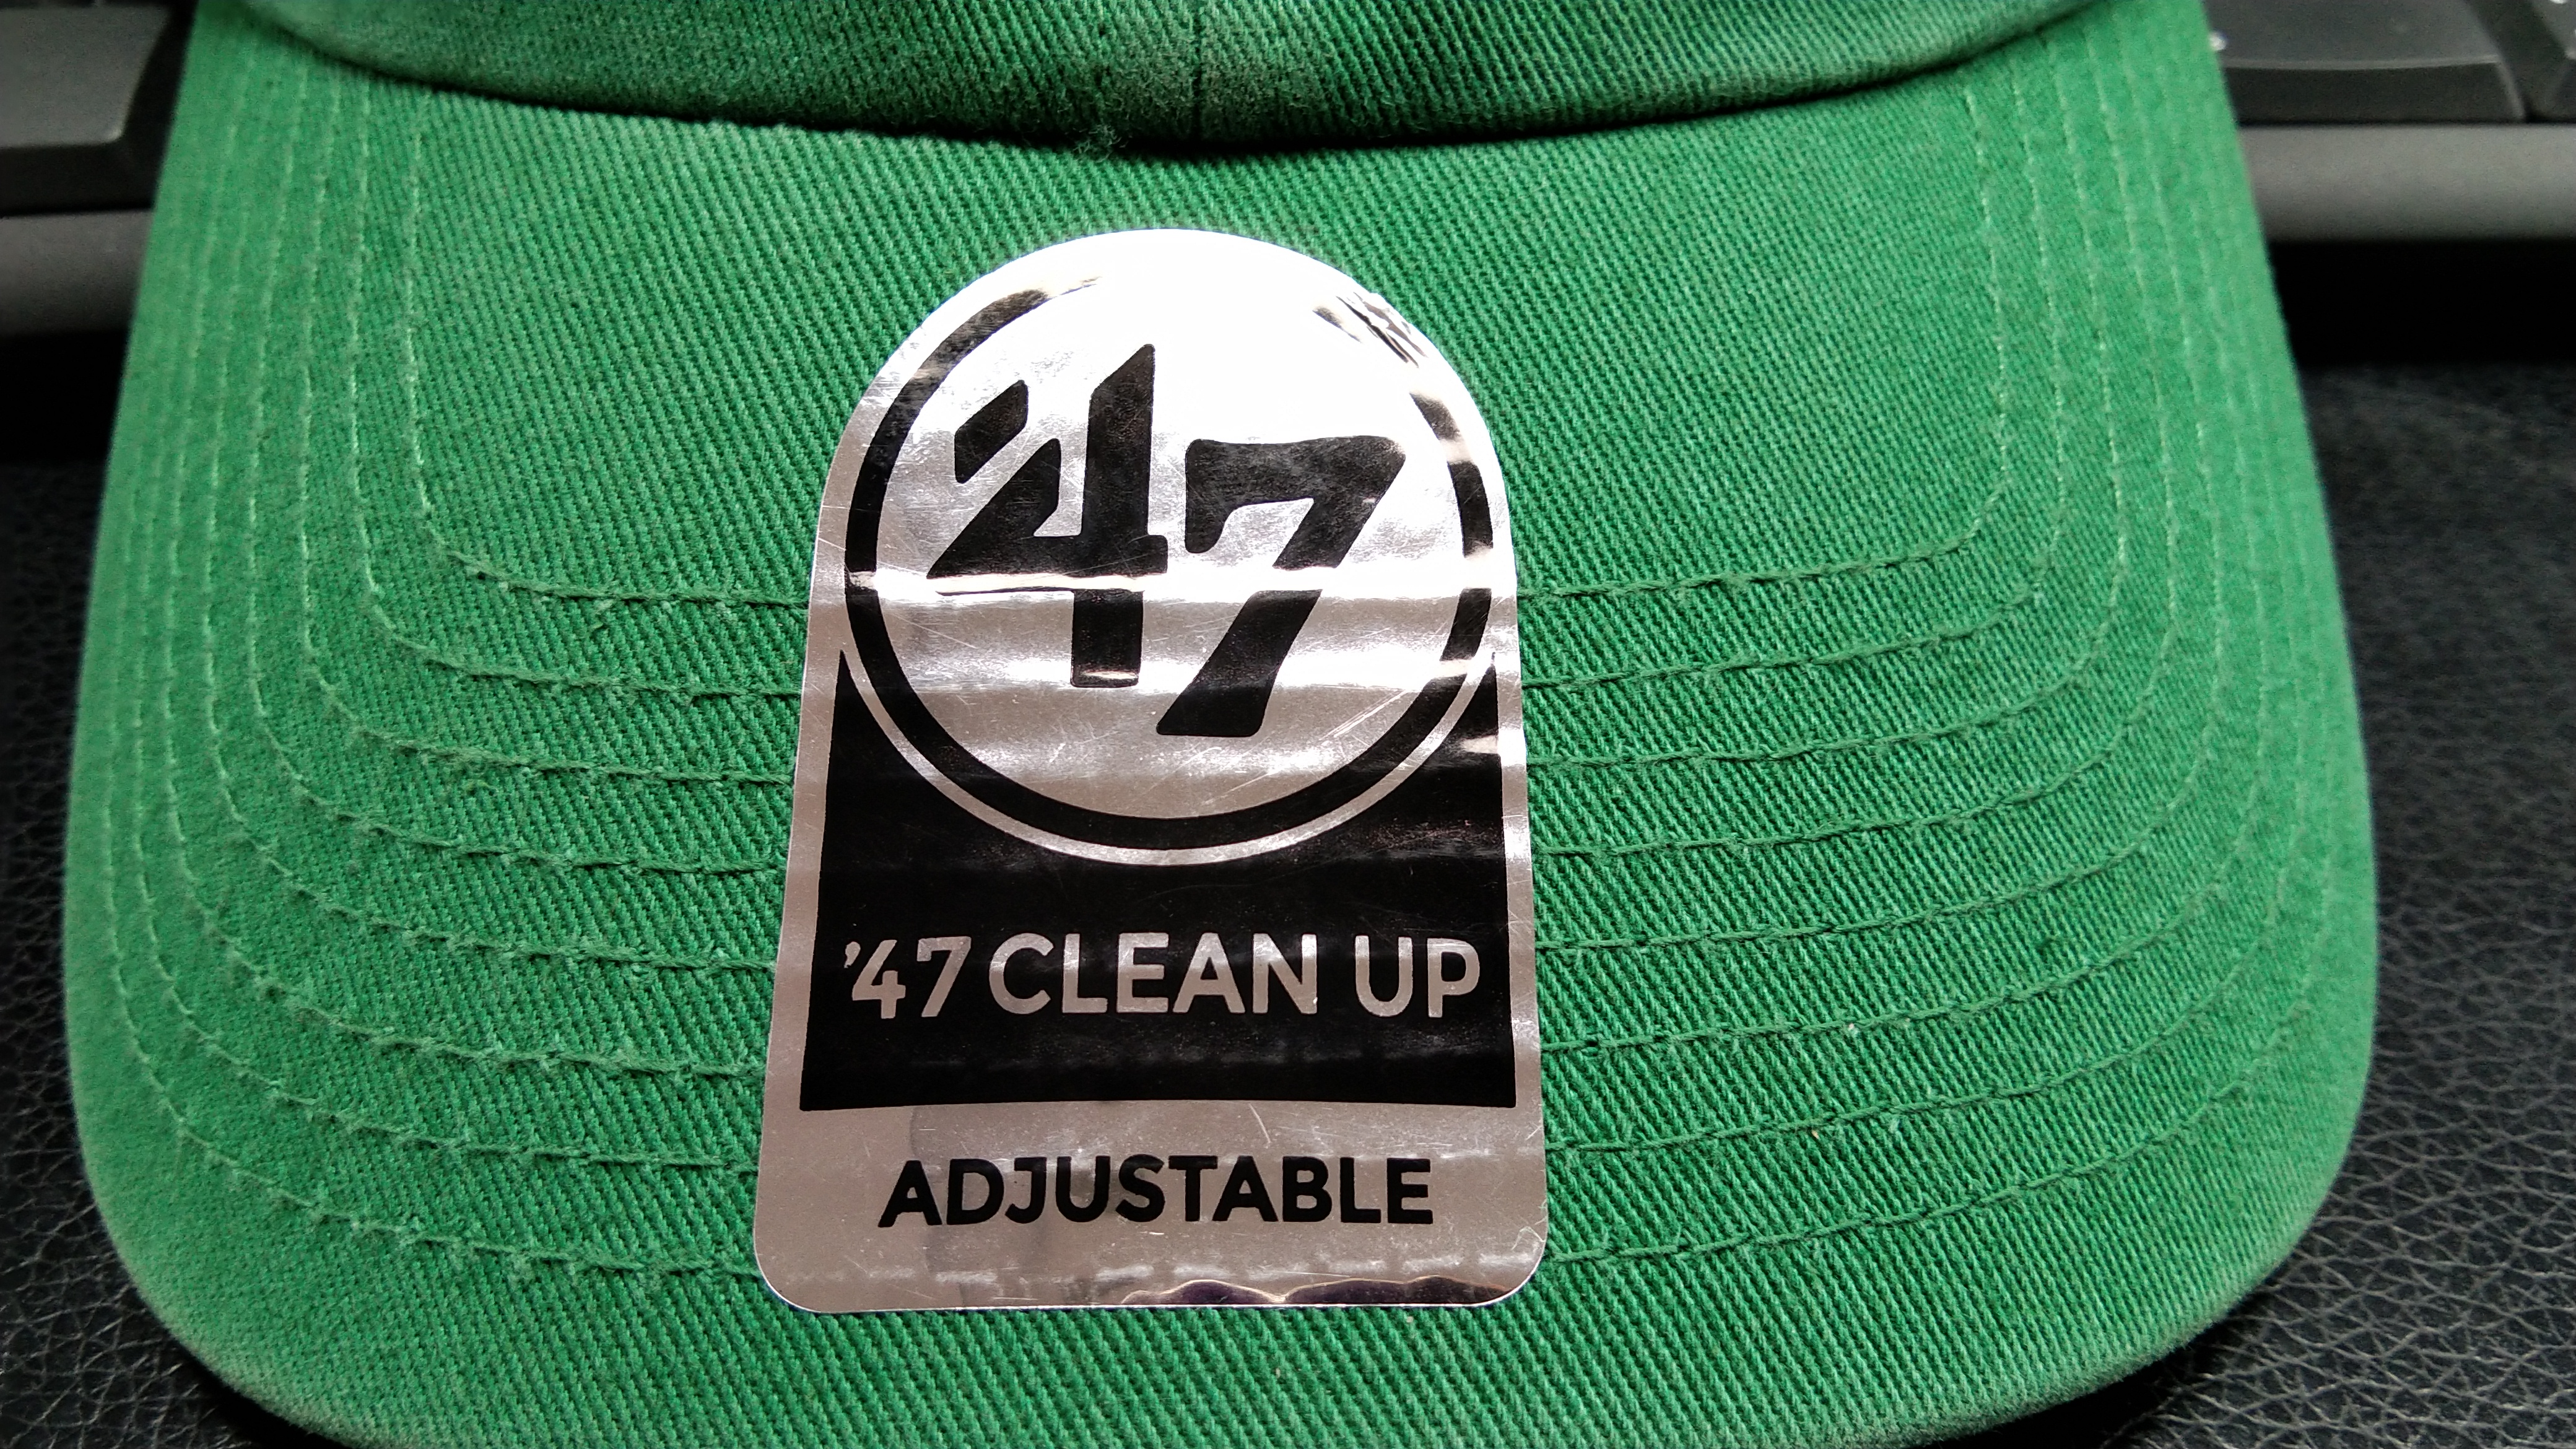 47Brand 经典款MLB棒球帽